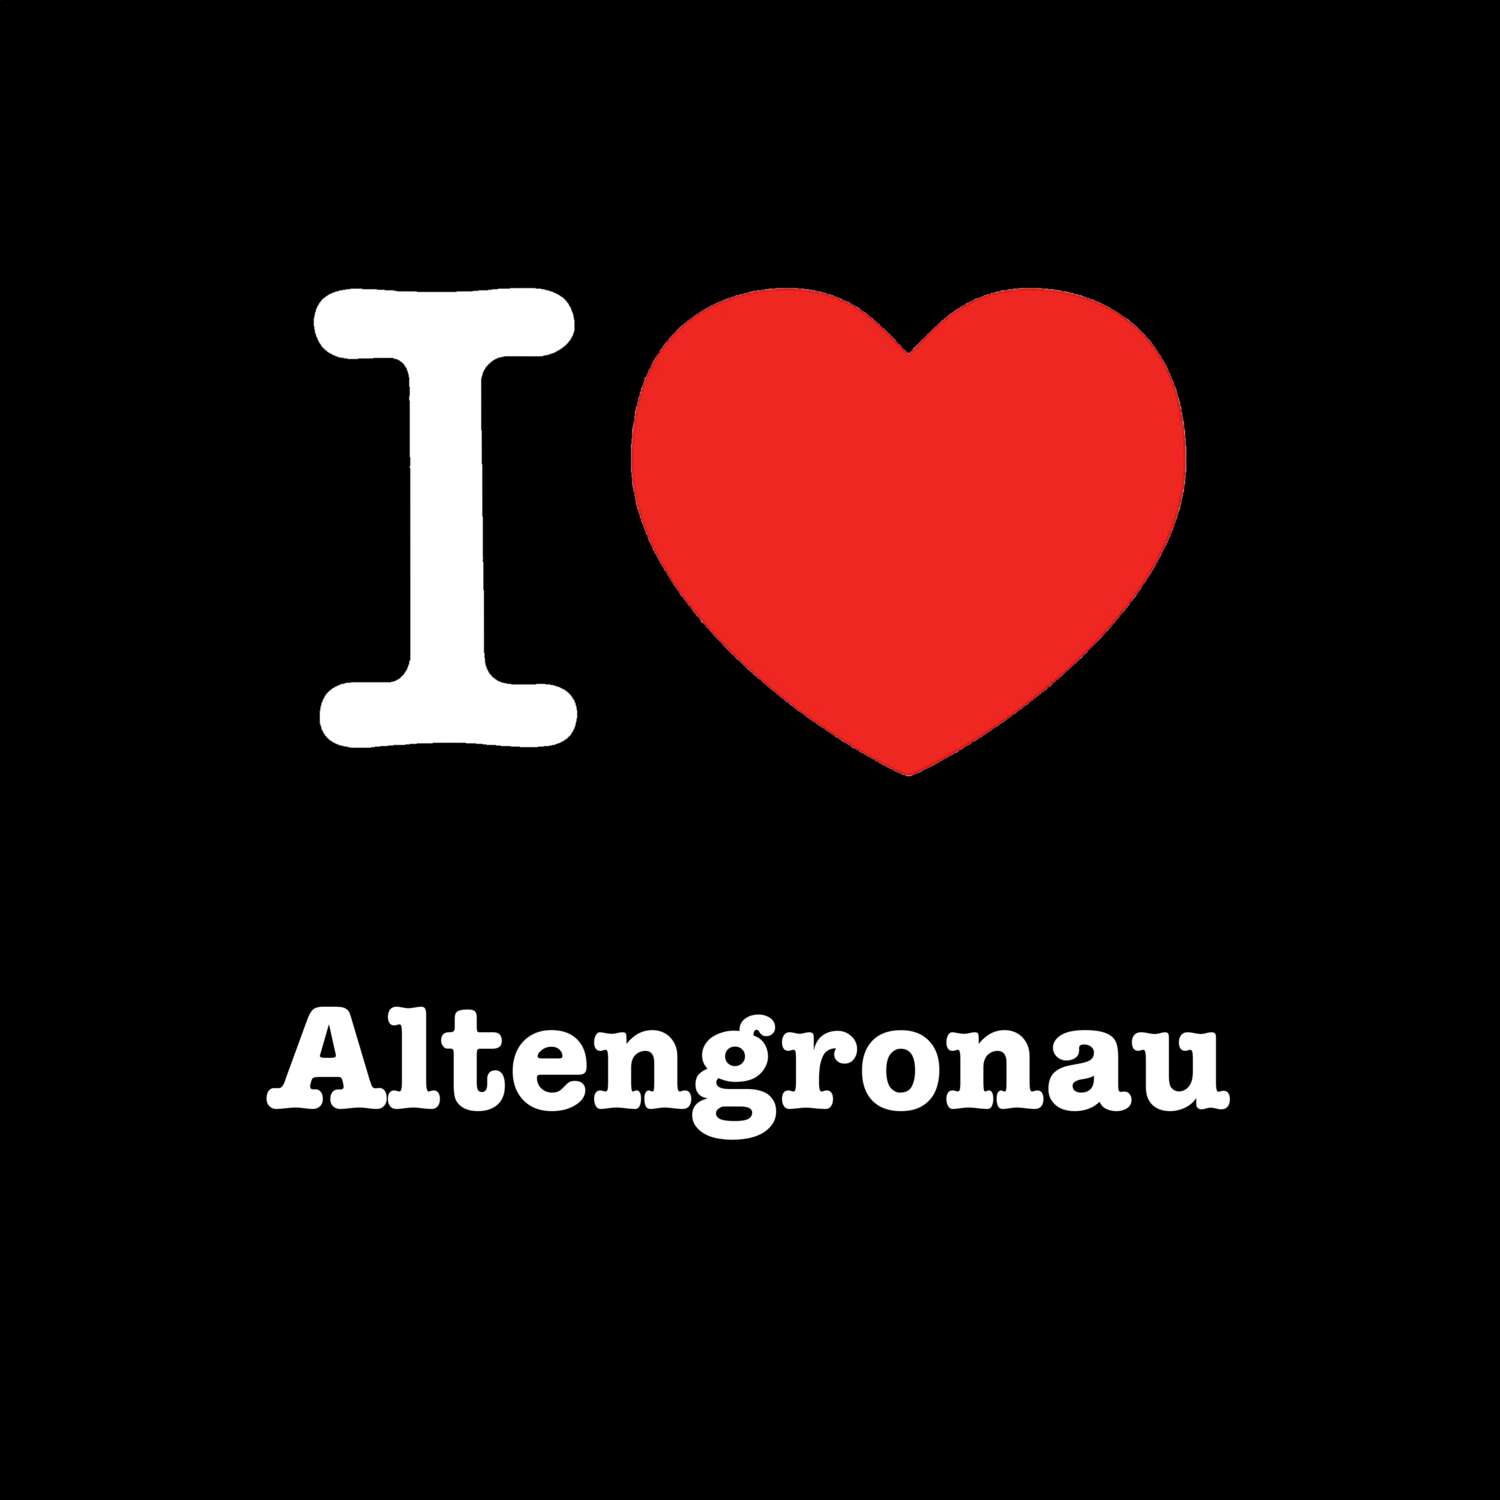 Altengronau T-Shirt »I love«